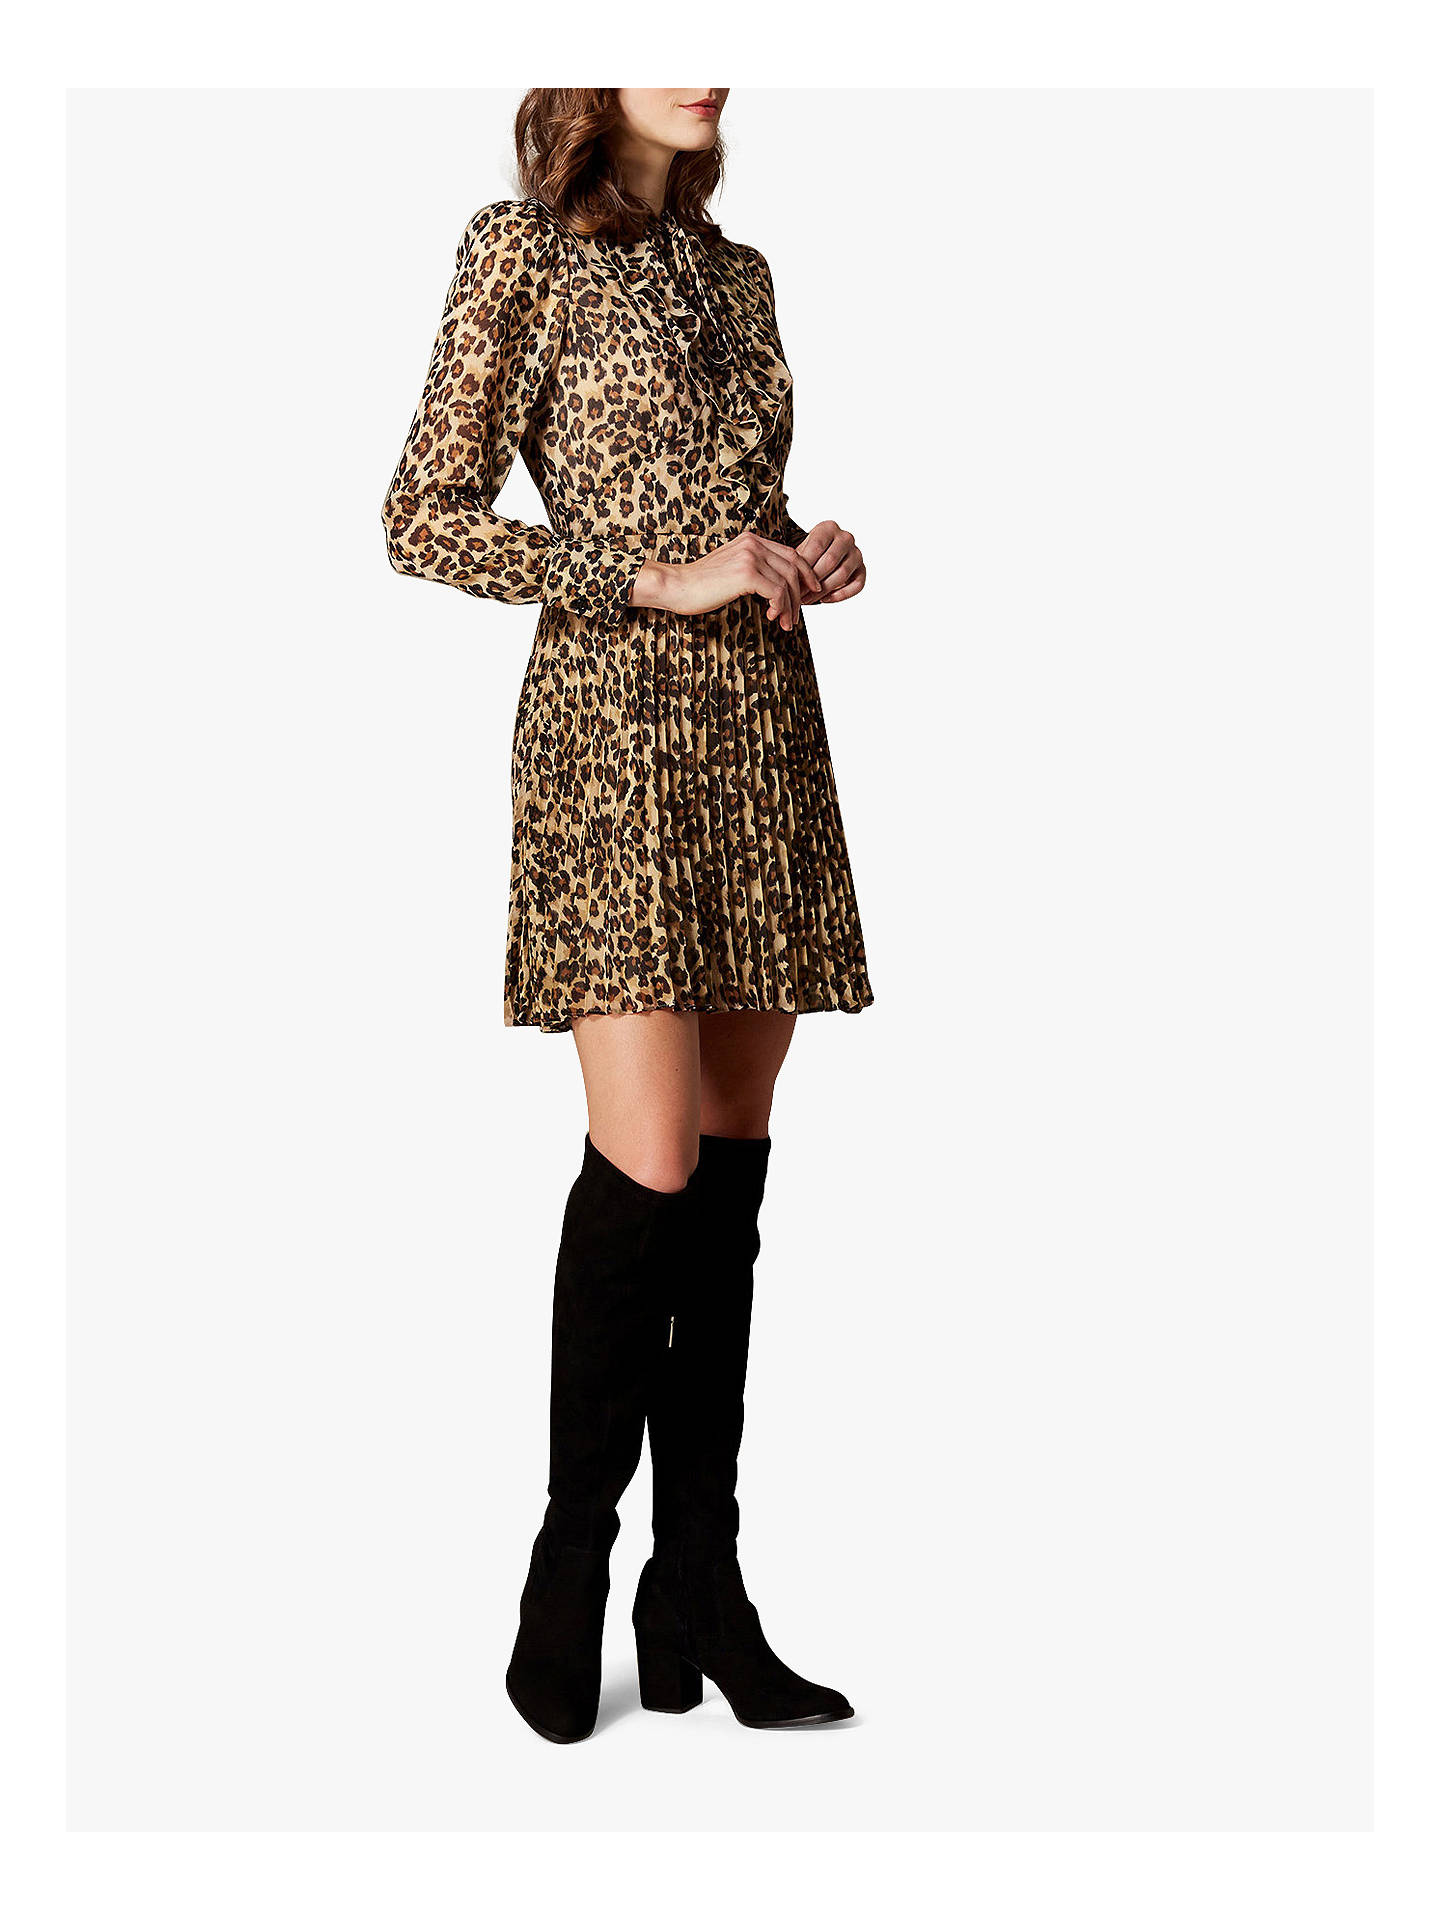 Karen Millen Leopard Print Ruffle Dress, Multi at John Lewis & Partners